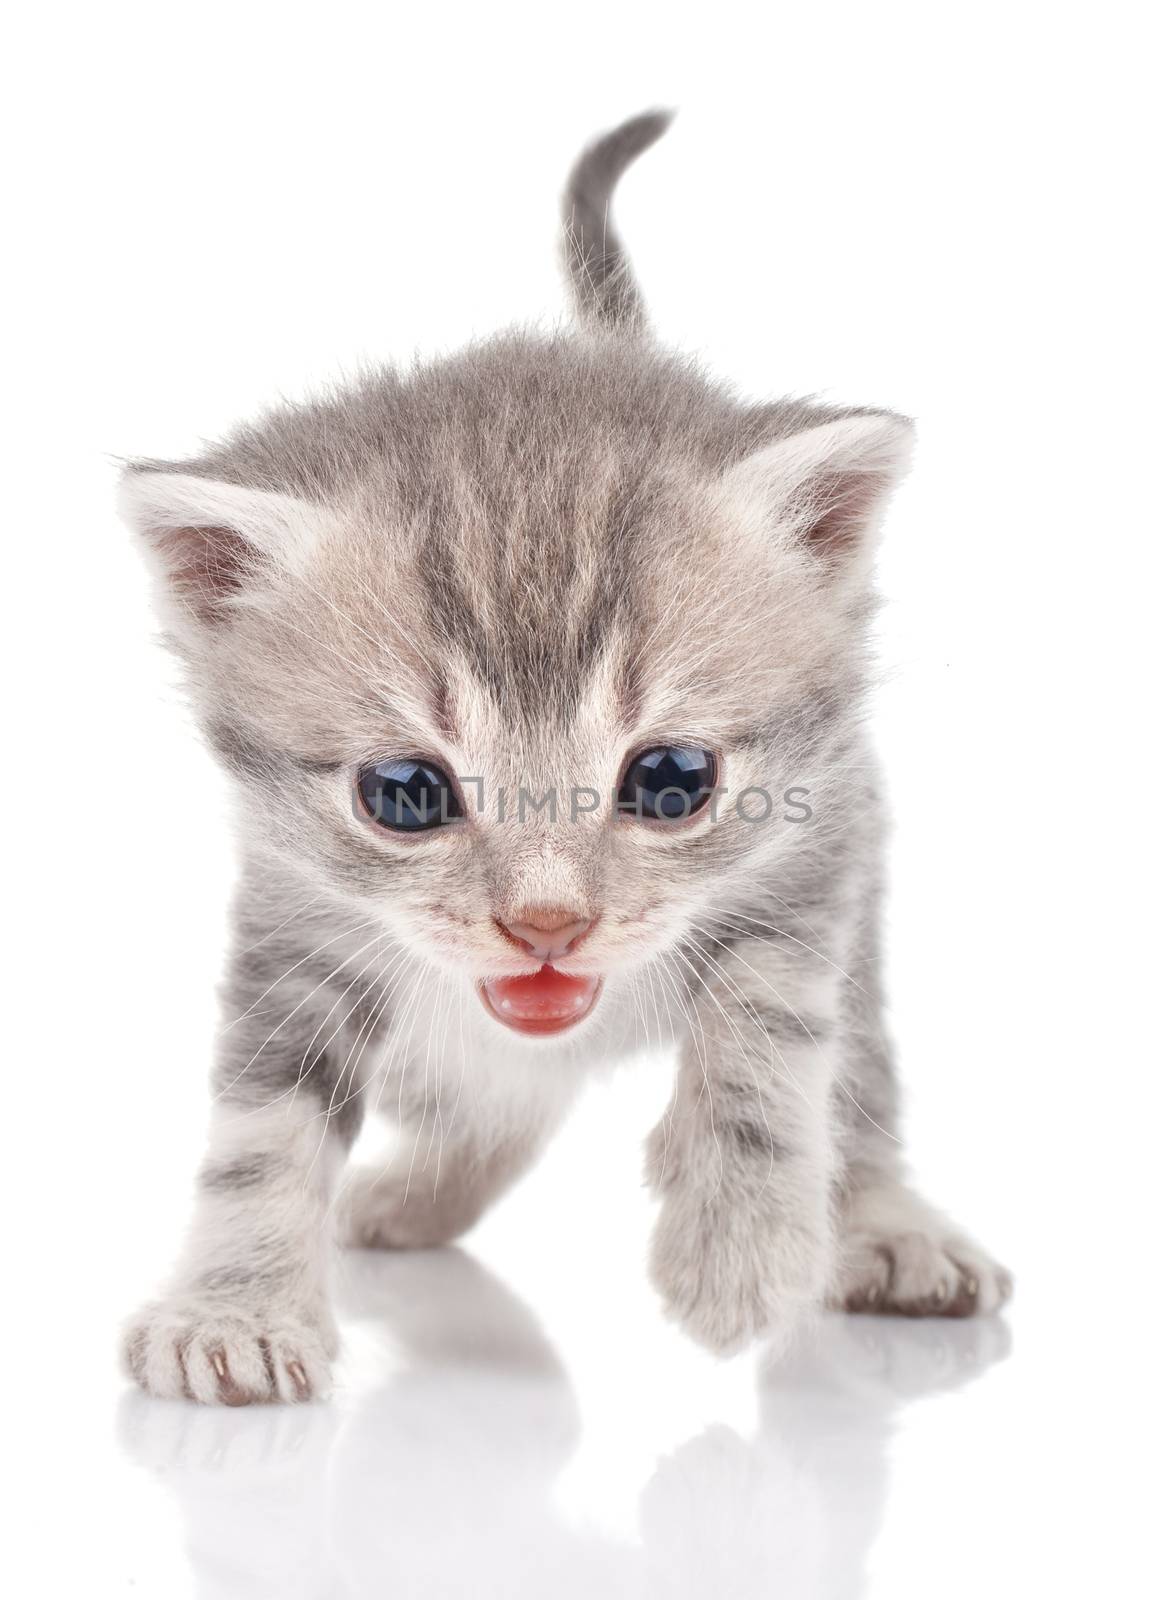 Gray kitten crying on white background